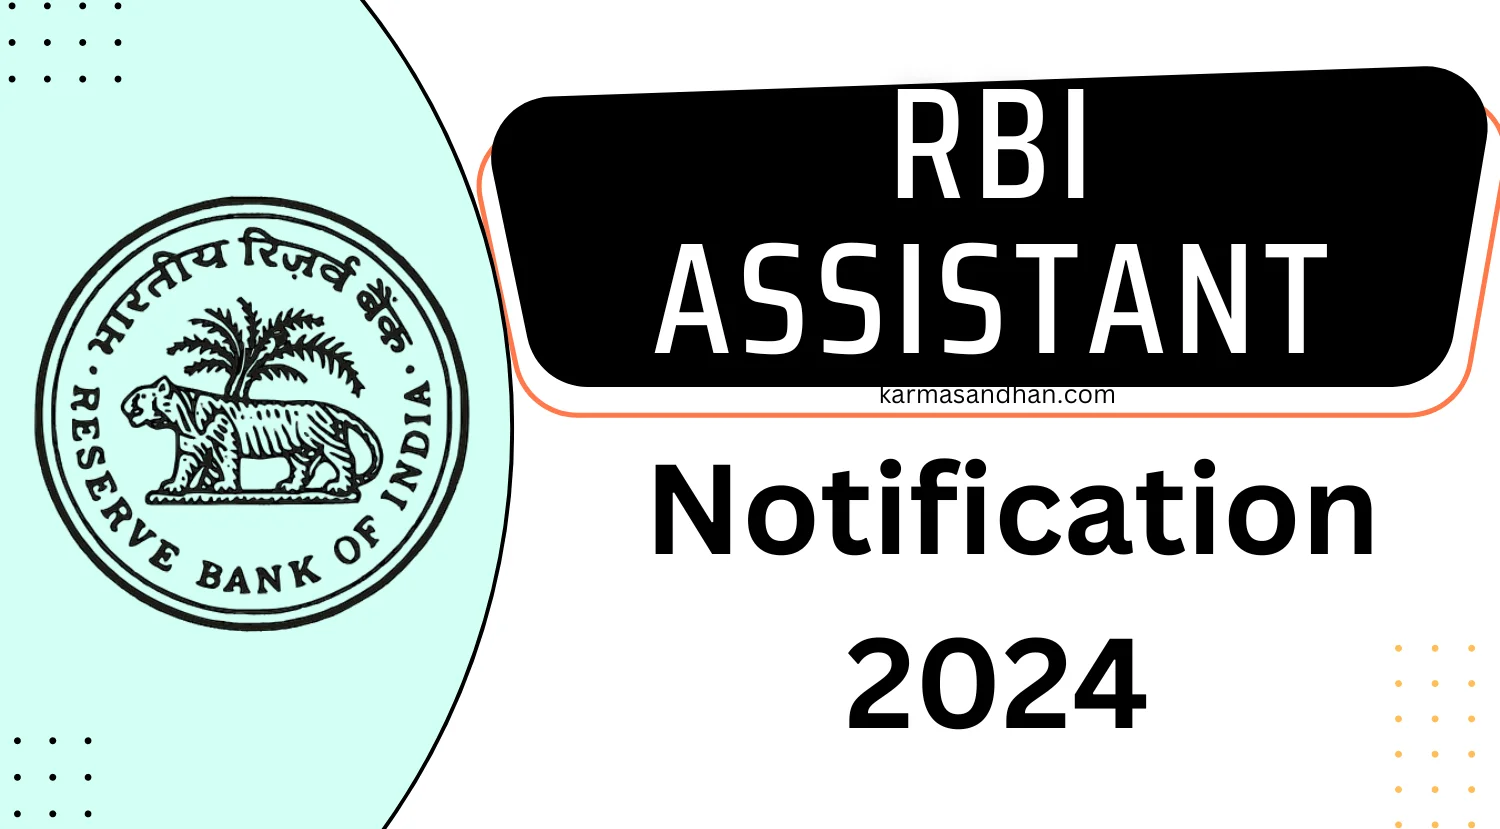 RBI Assistant Recruitment 2024 Notification